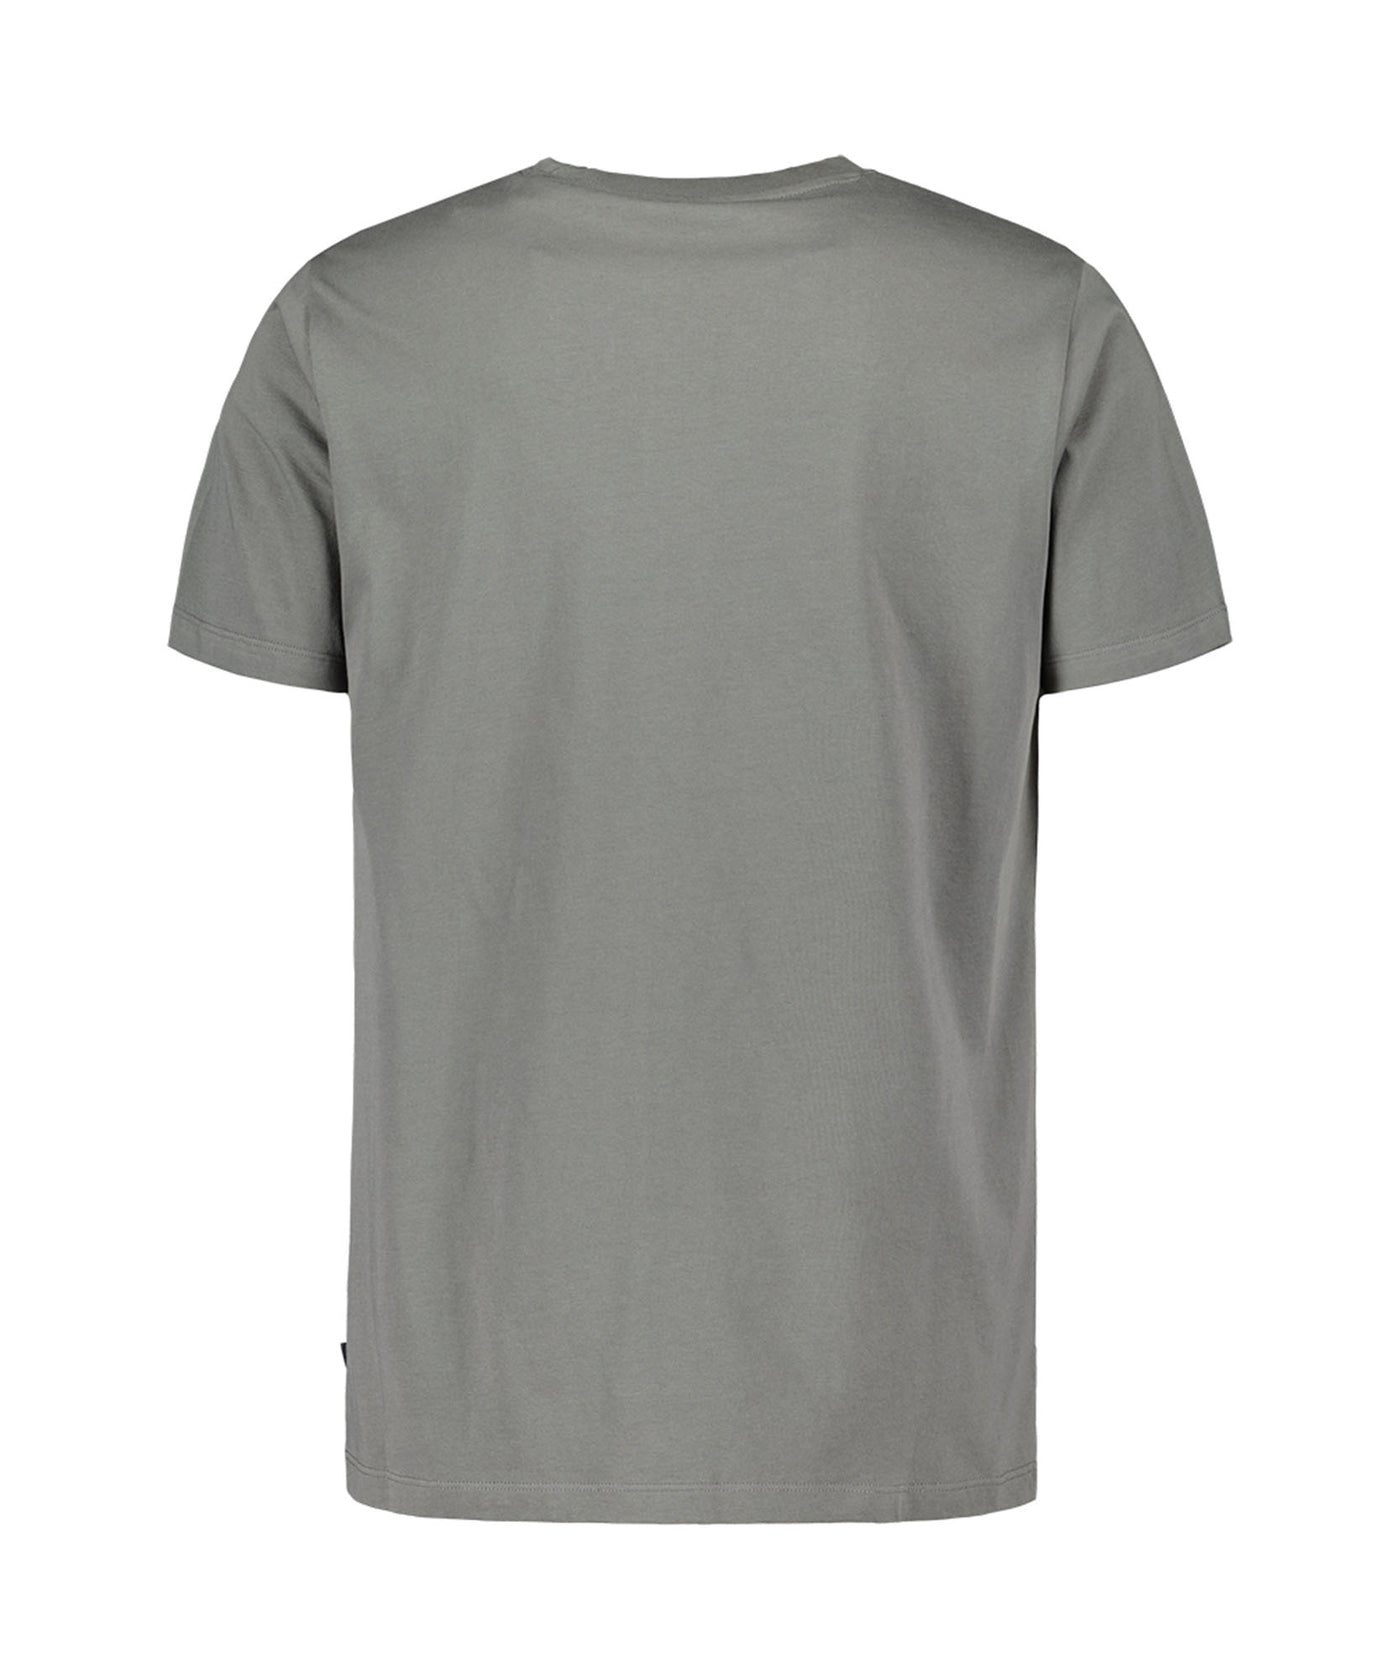 Airforce - Tbm0888 - Basic T-shirt - 930 Castor Gray